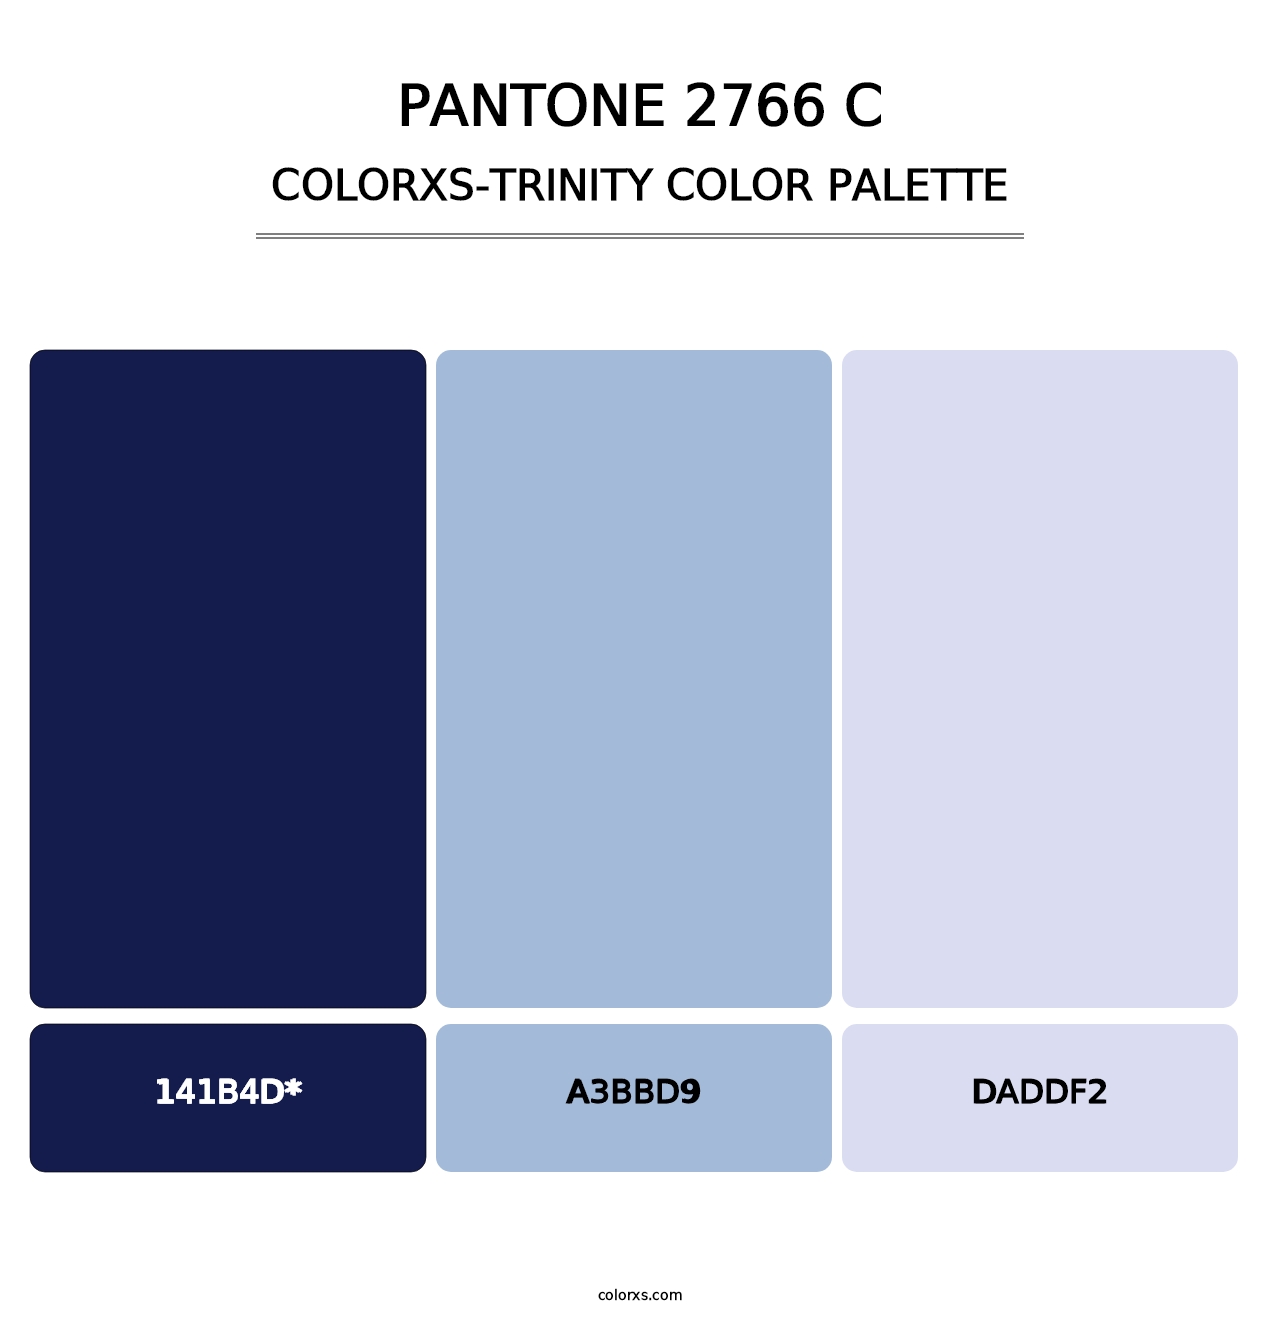 PANTONE 2766 C - Colorxs Trinity Palette